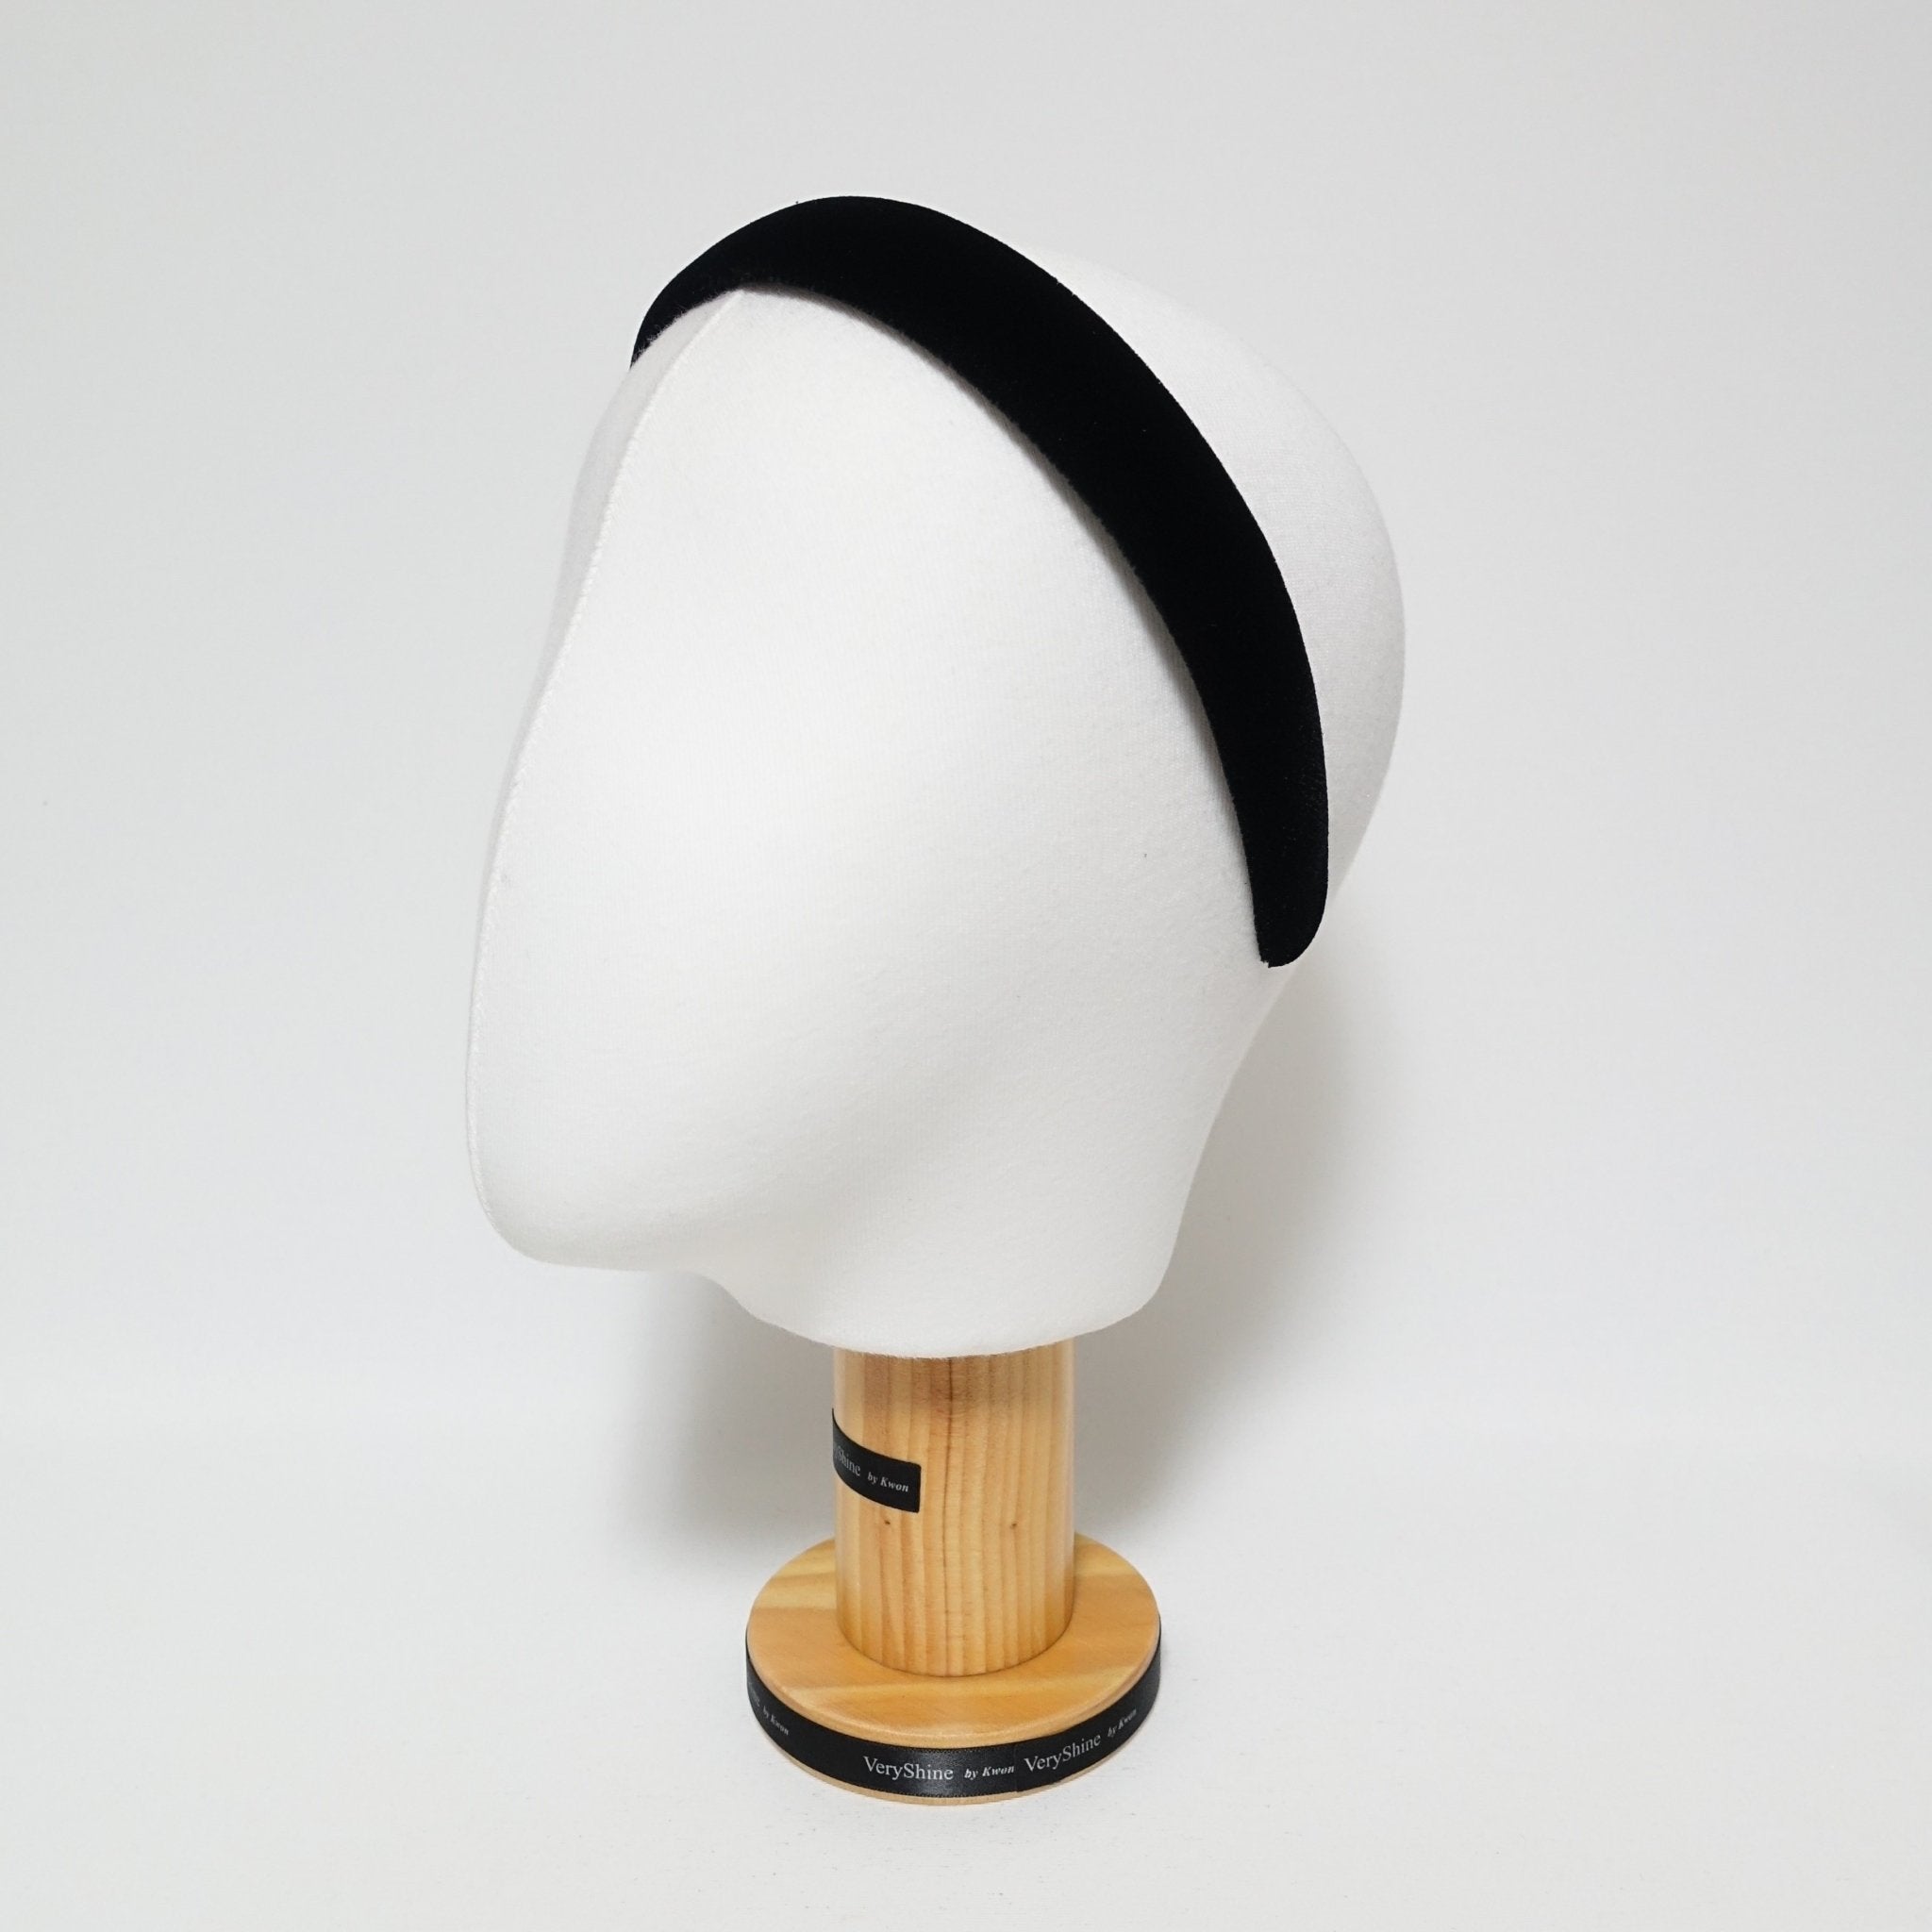 veryshine.com hairband/headband 1.1 inches Luxury double velvet black fashion headband women hairband